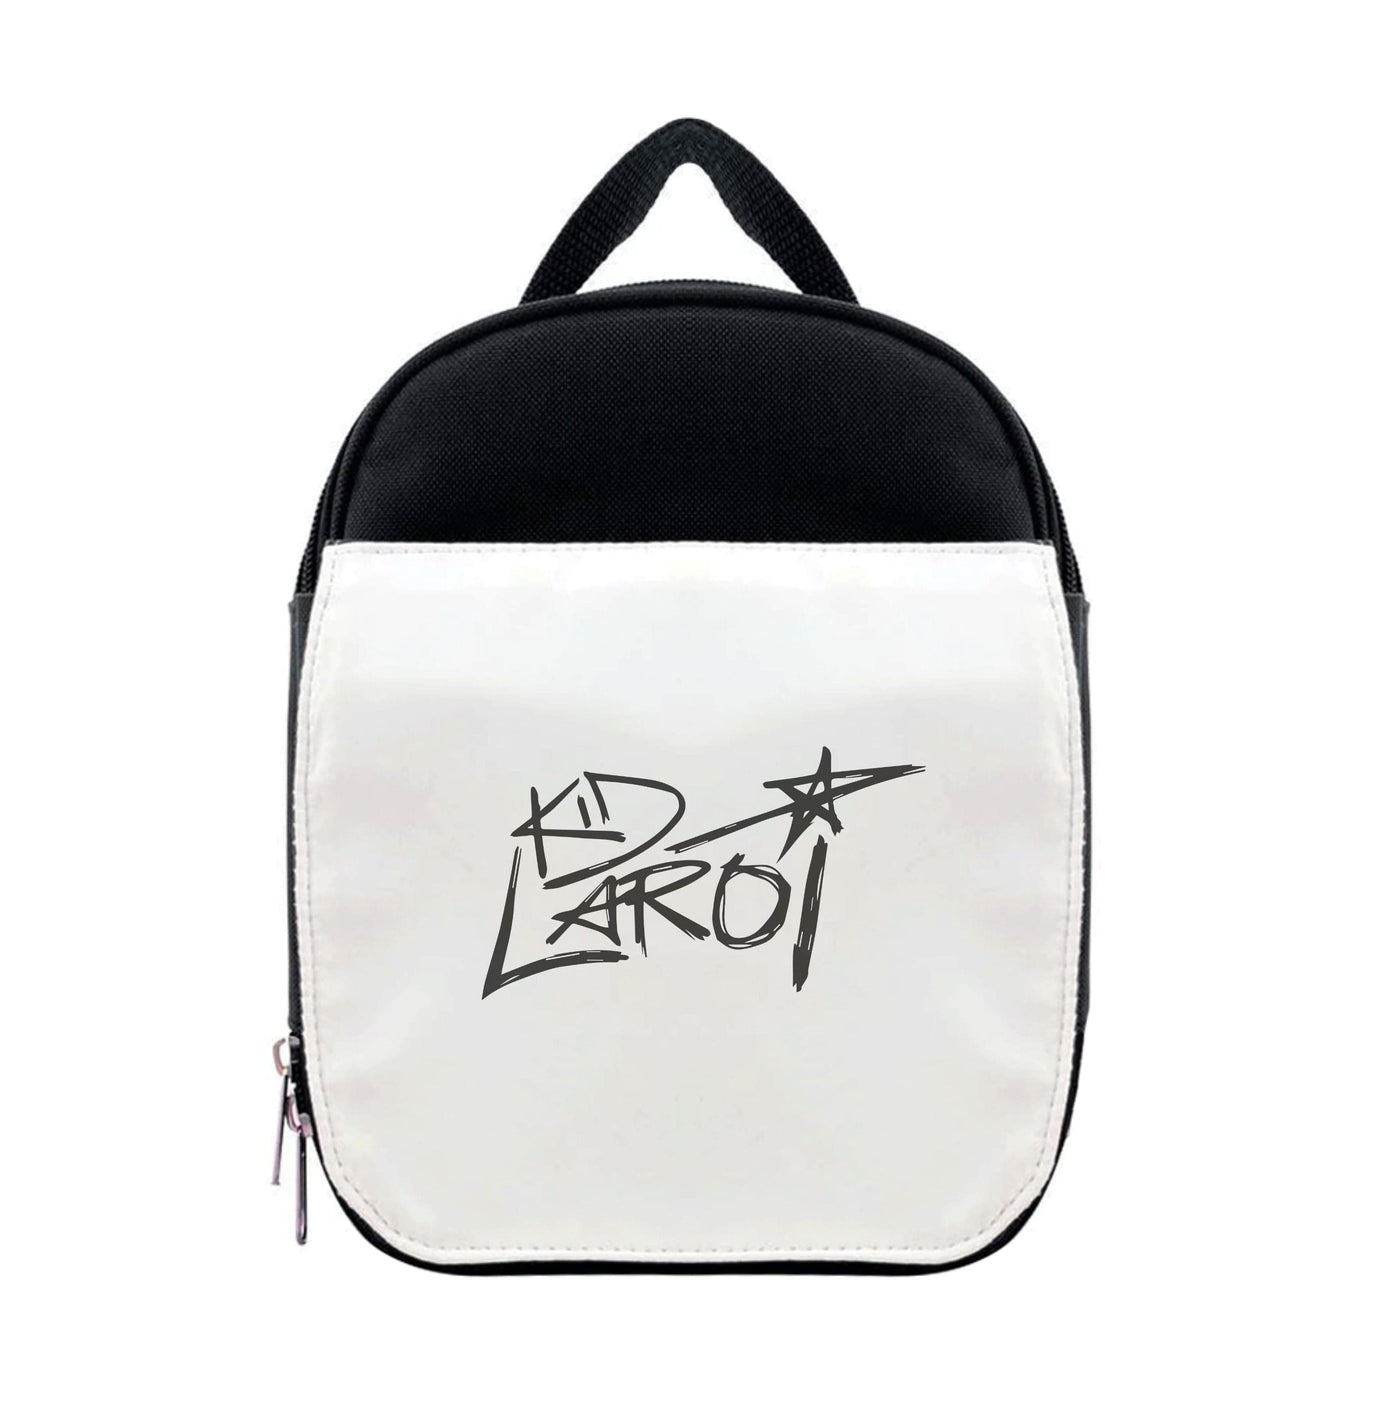 Kid Laroi Sketch  Lunchbox